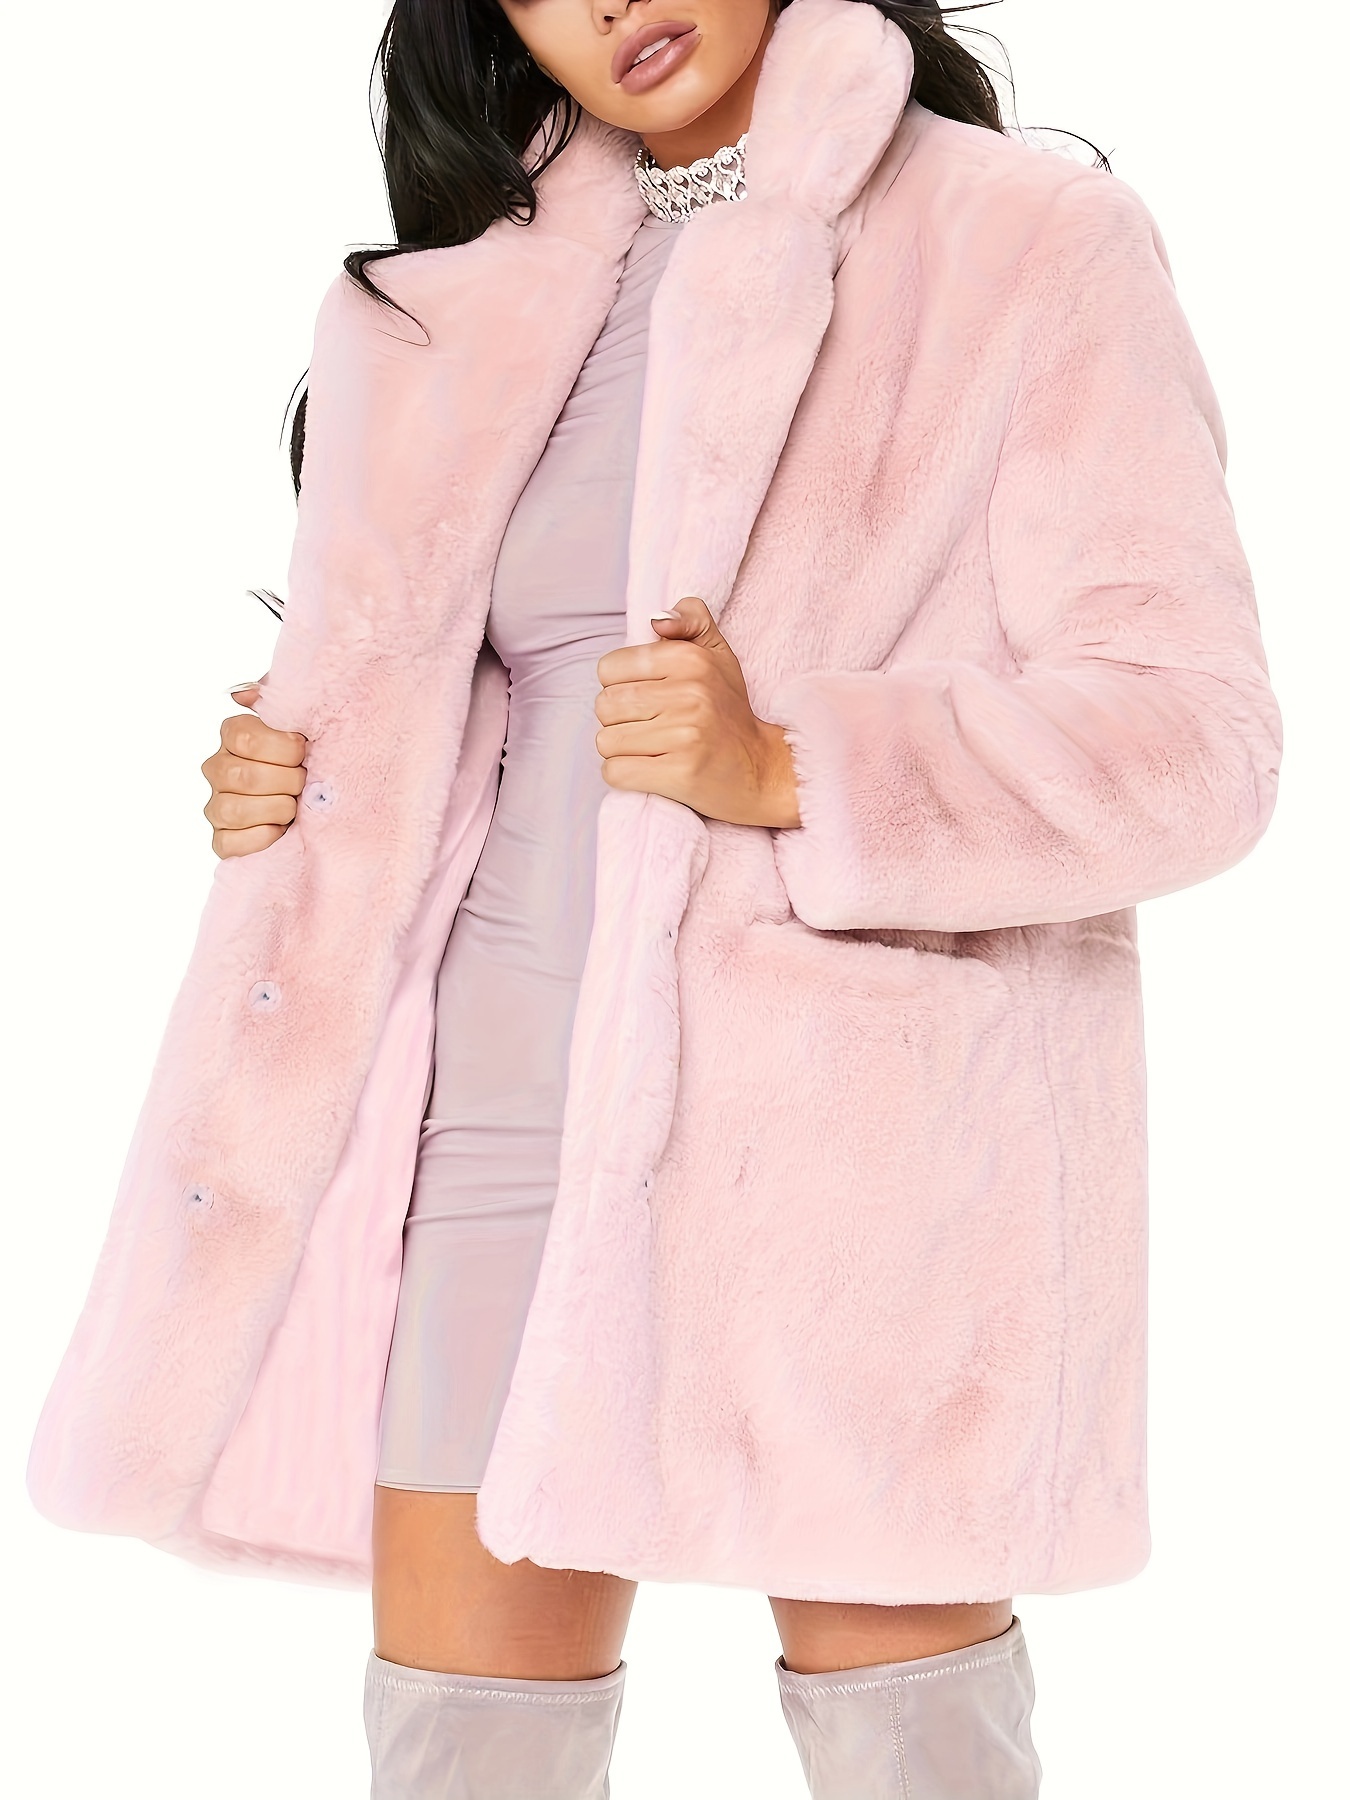 Solid Color Winter Long Warm Teddy Faux Fur Coat For Women Plush